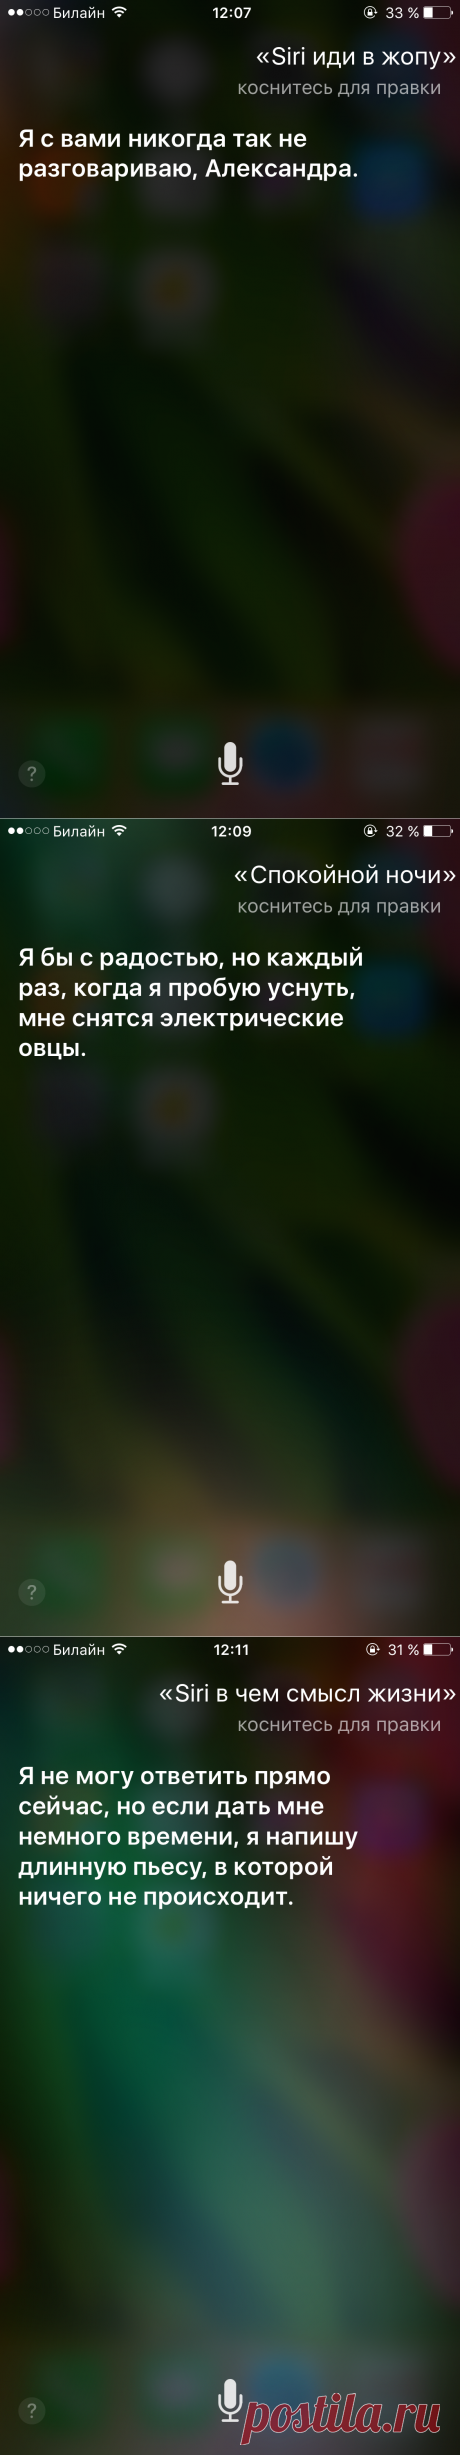 Siri шутит: 25 забавных диалогов на русском языке - Pics.Ru